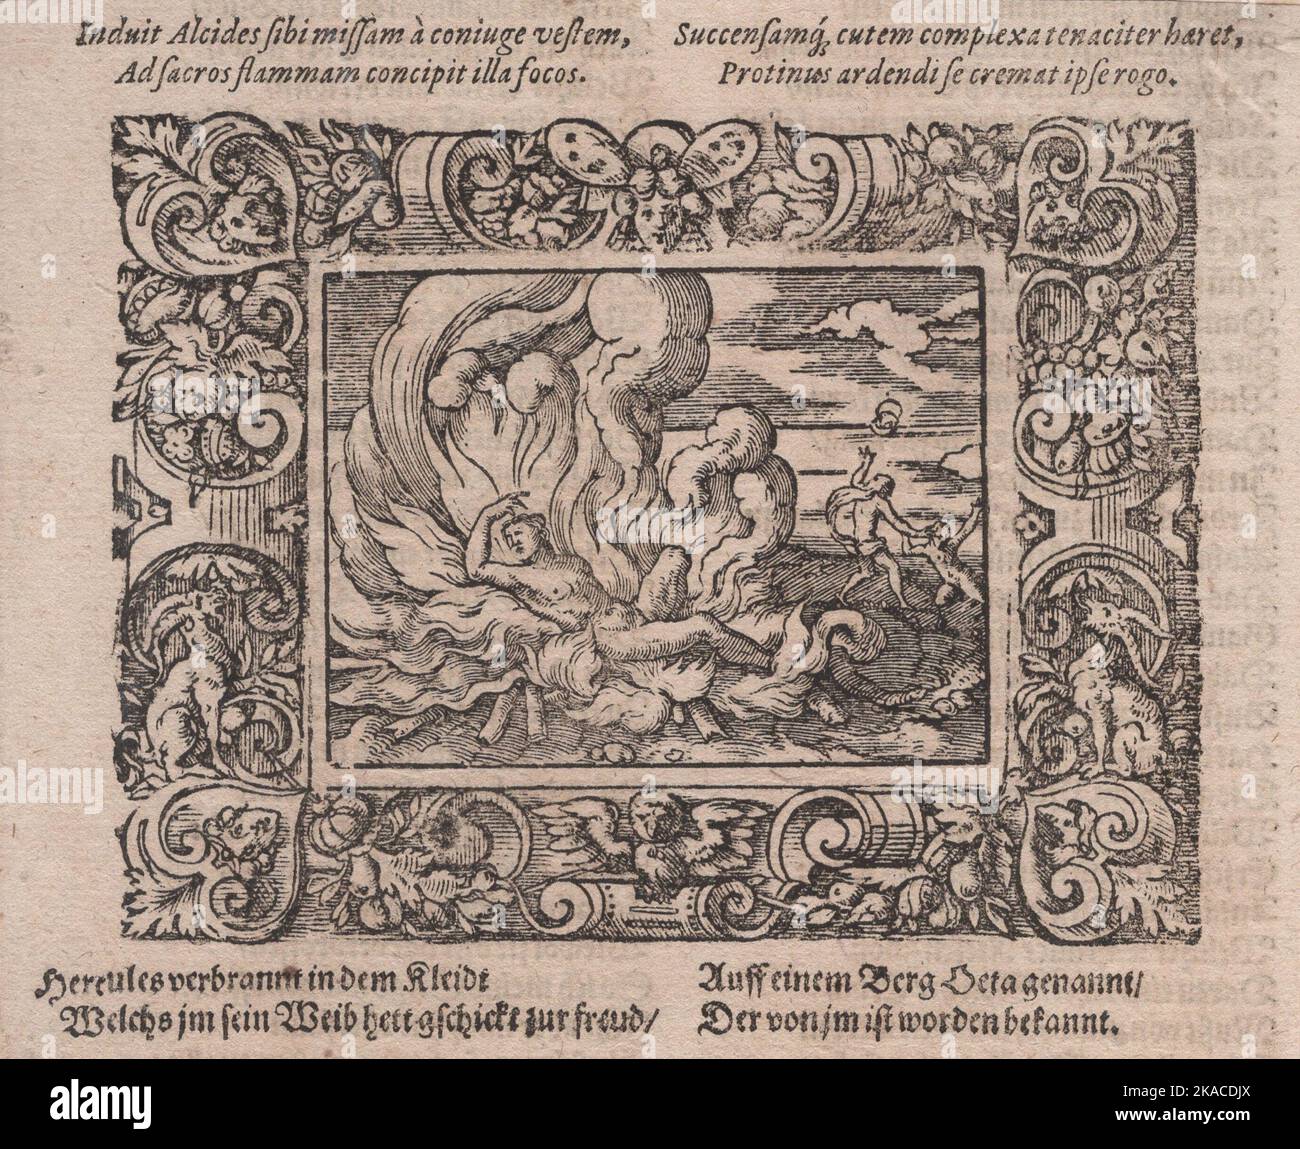 original Ovid - Metamorphoses illustration 16th century Stock Photo